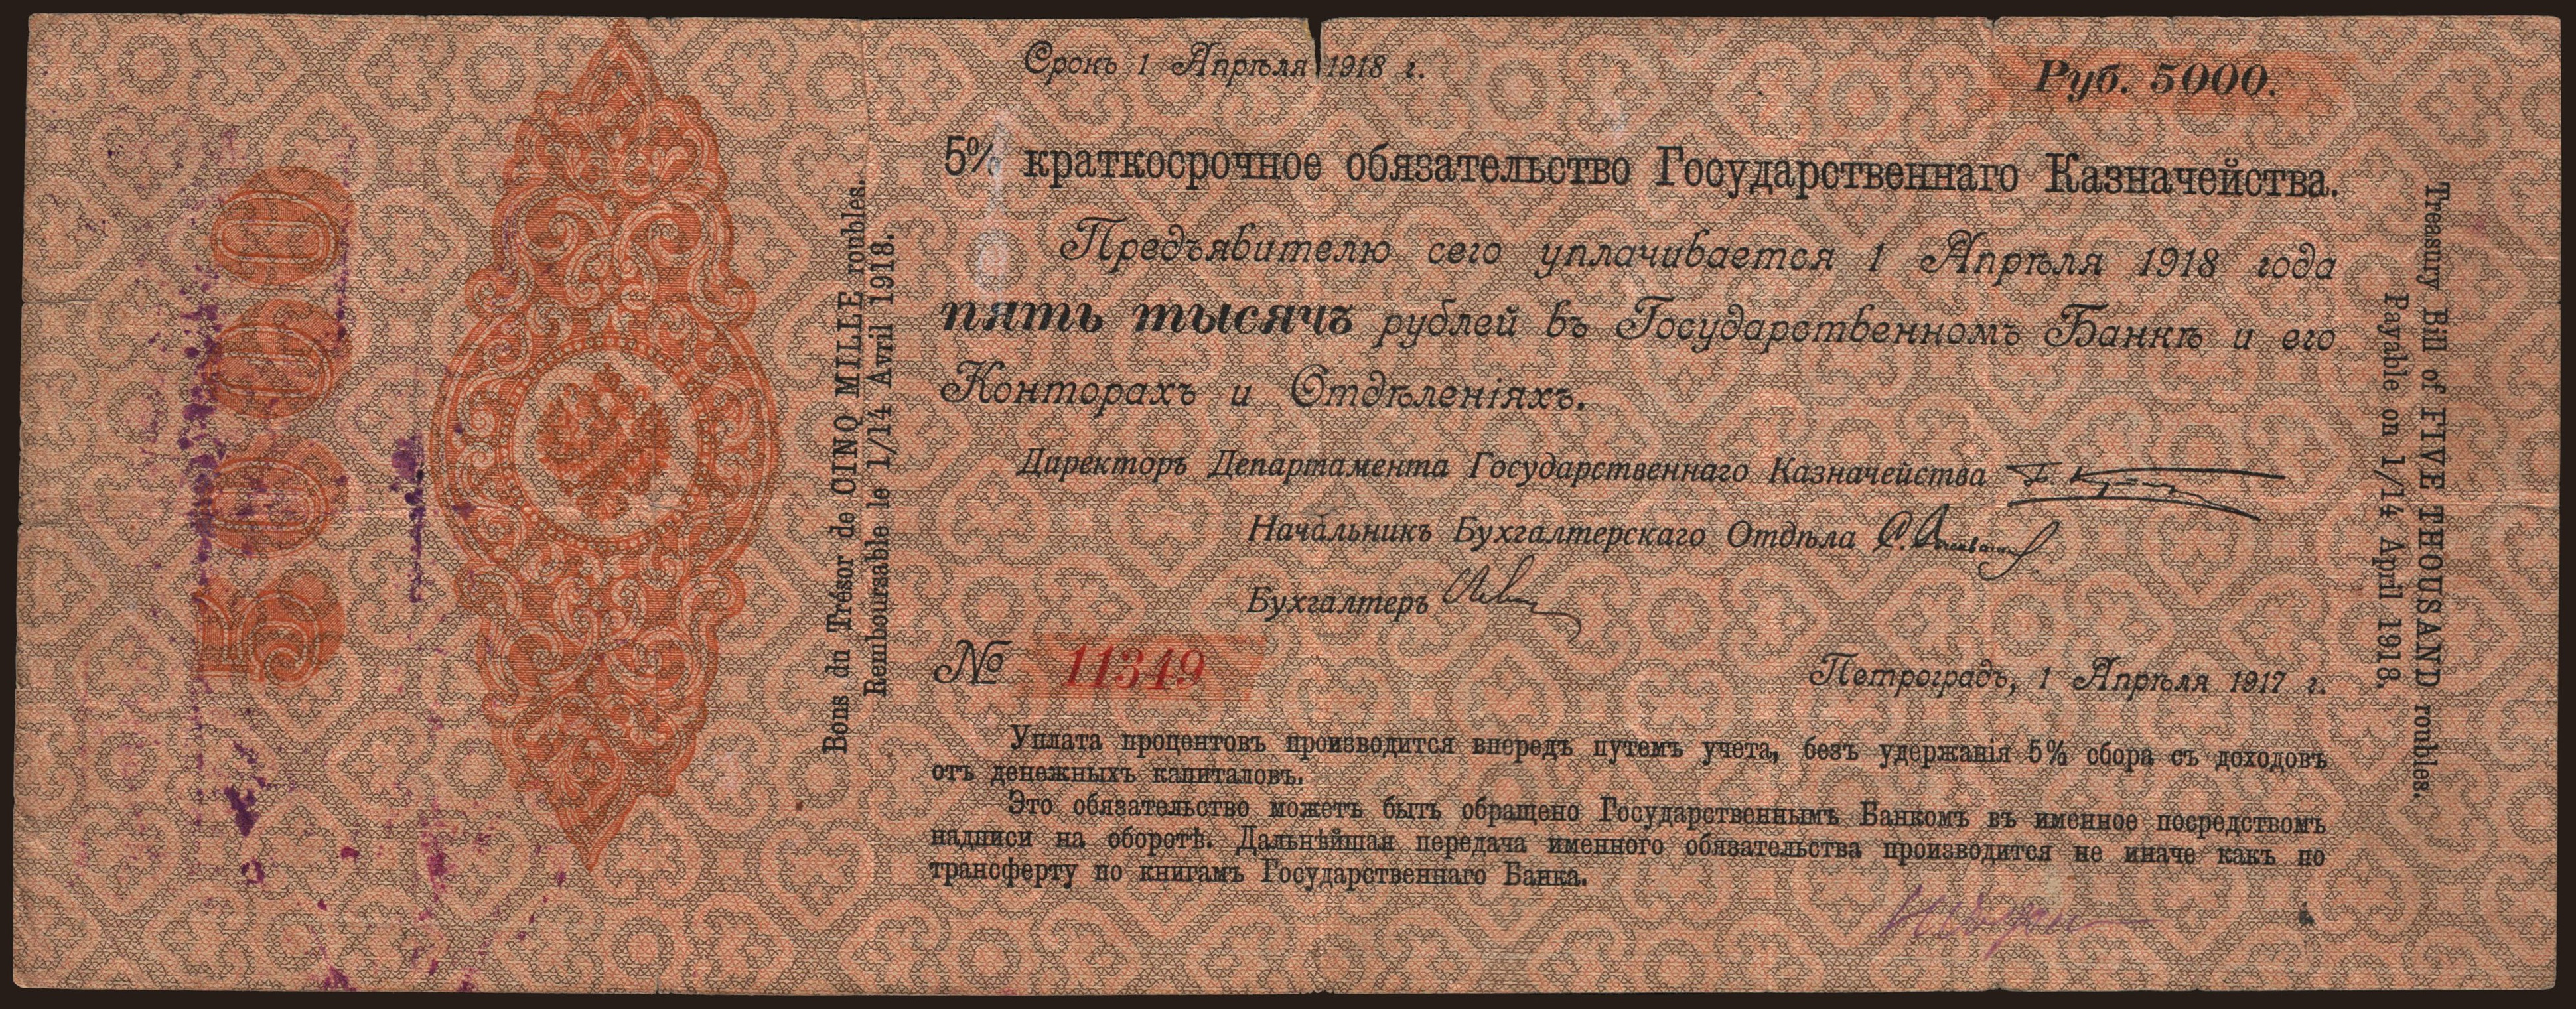 5000 rubel, 1917